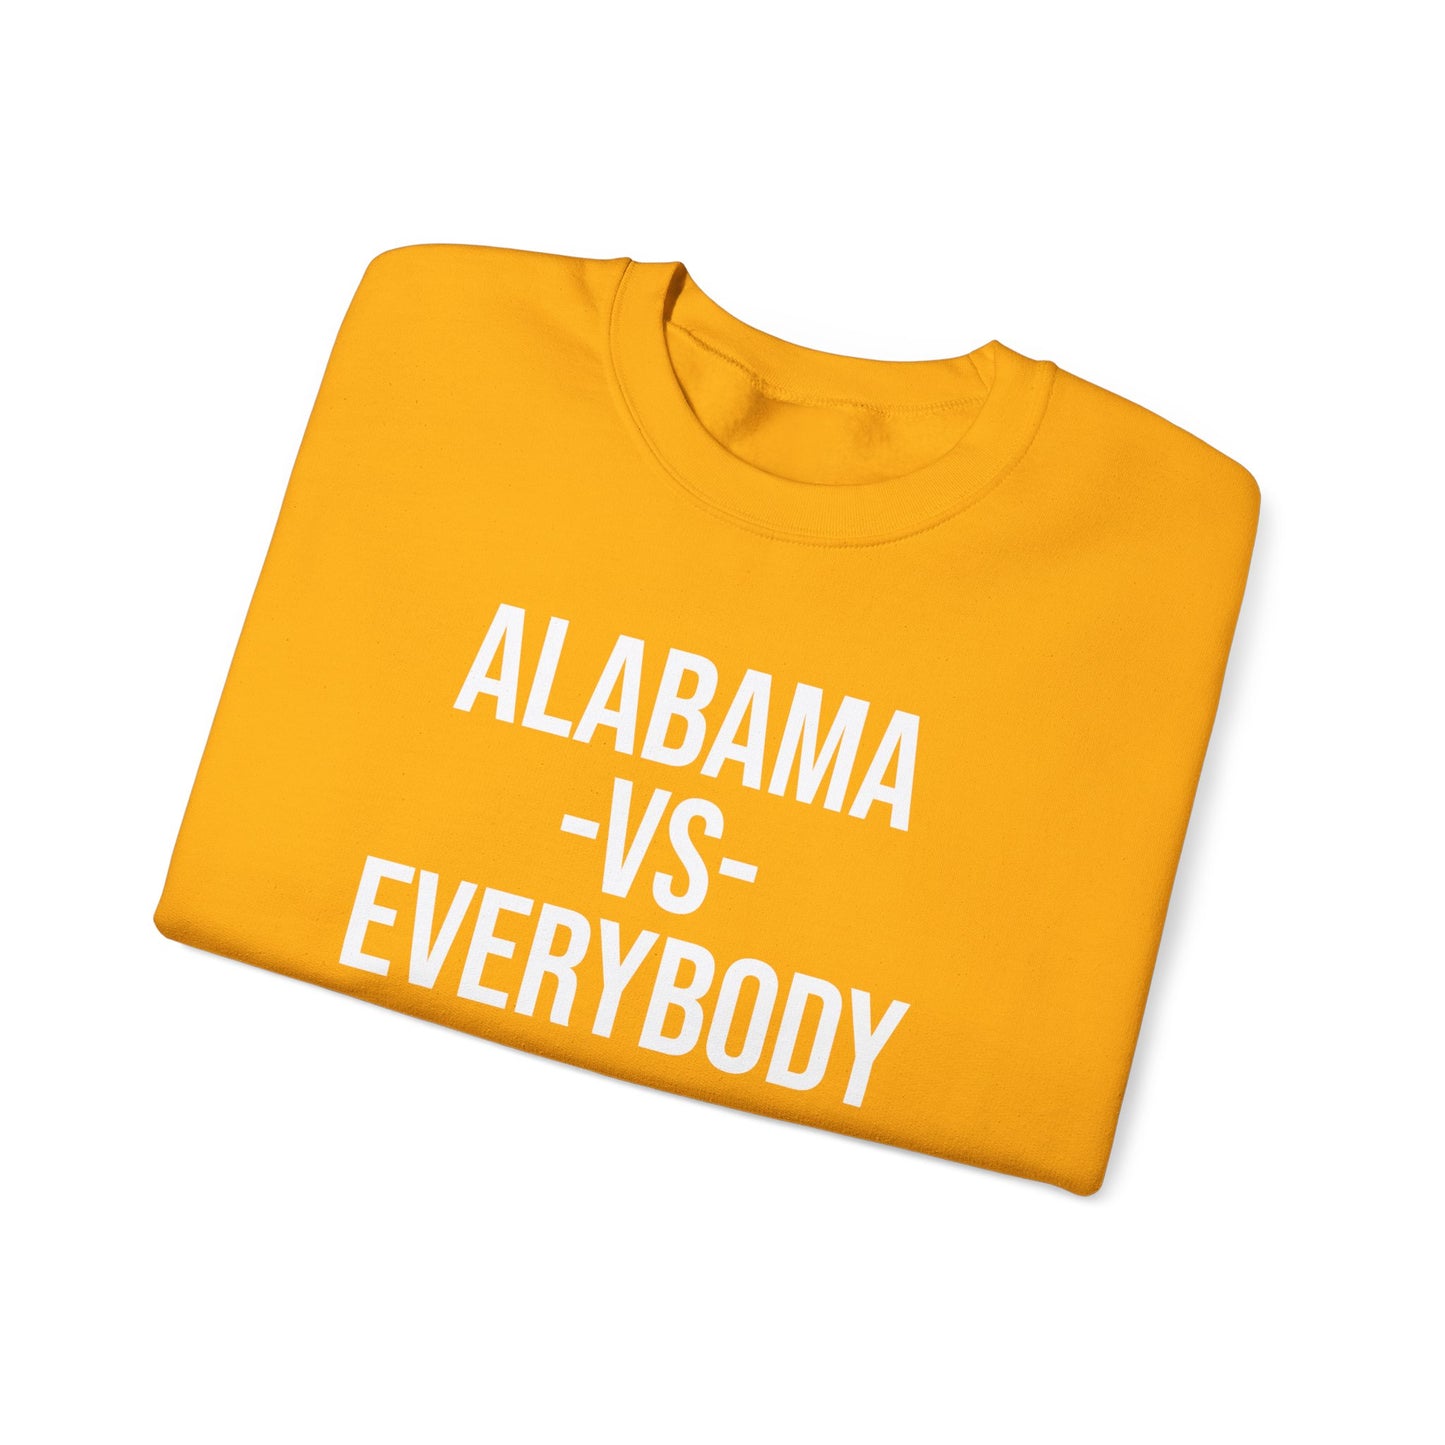 Alabama - VS - Everybody Unisex Heavy Blend™ Crewneck Sweatshirt